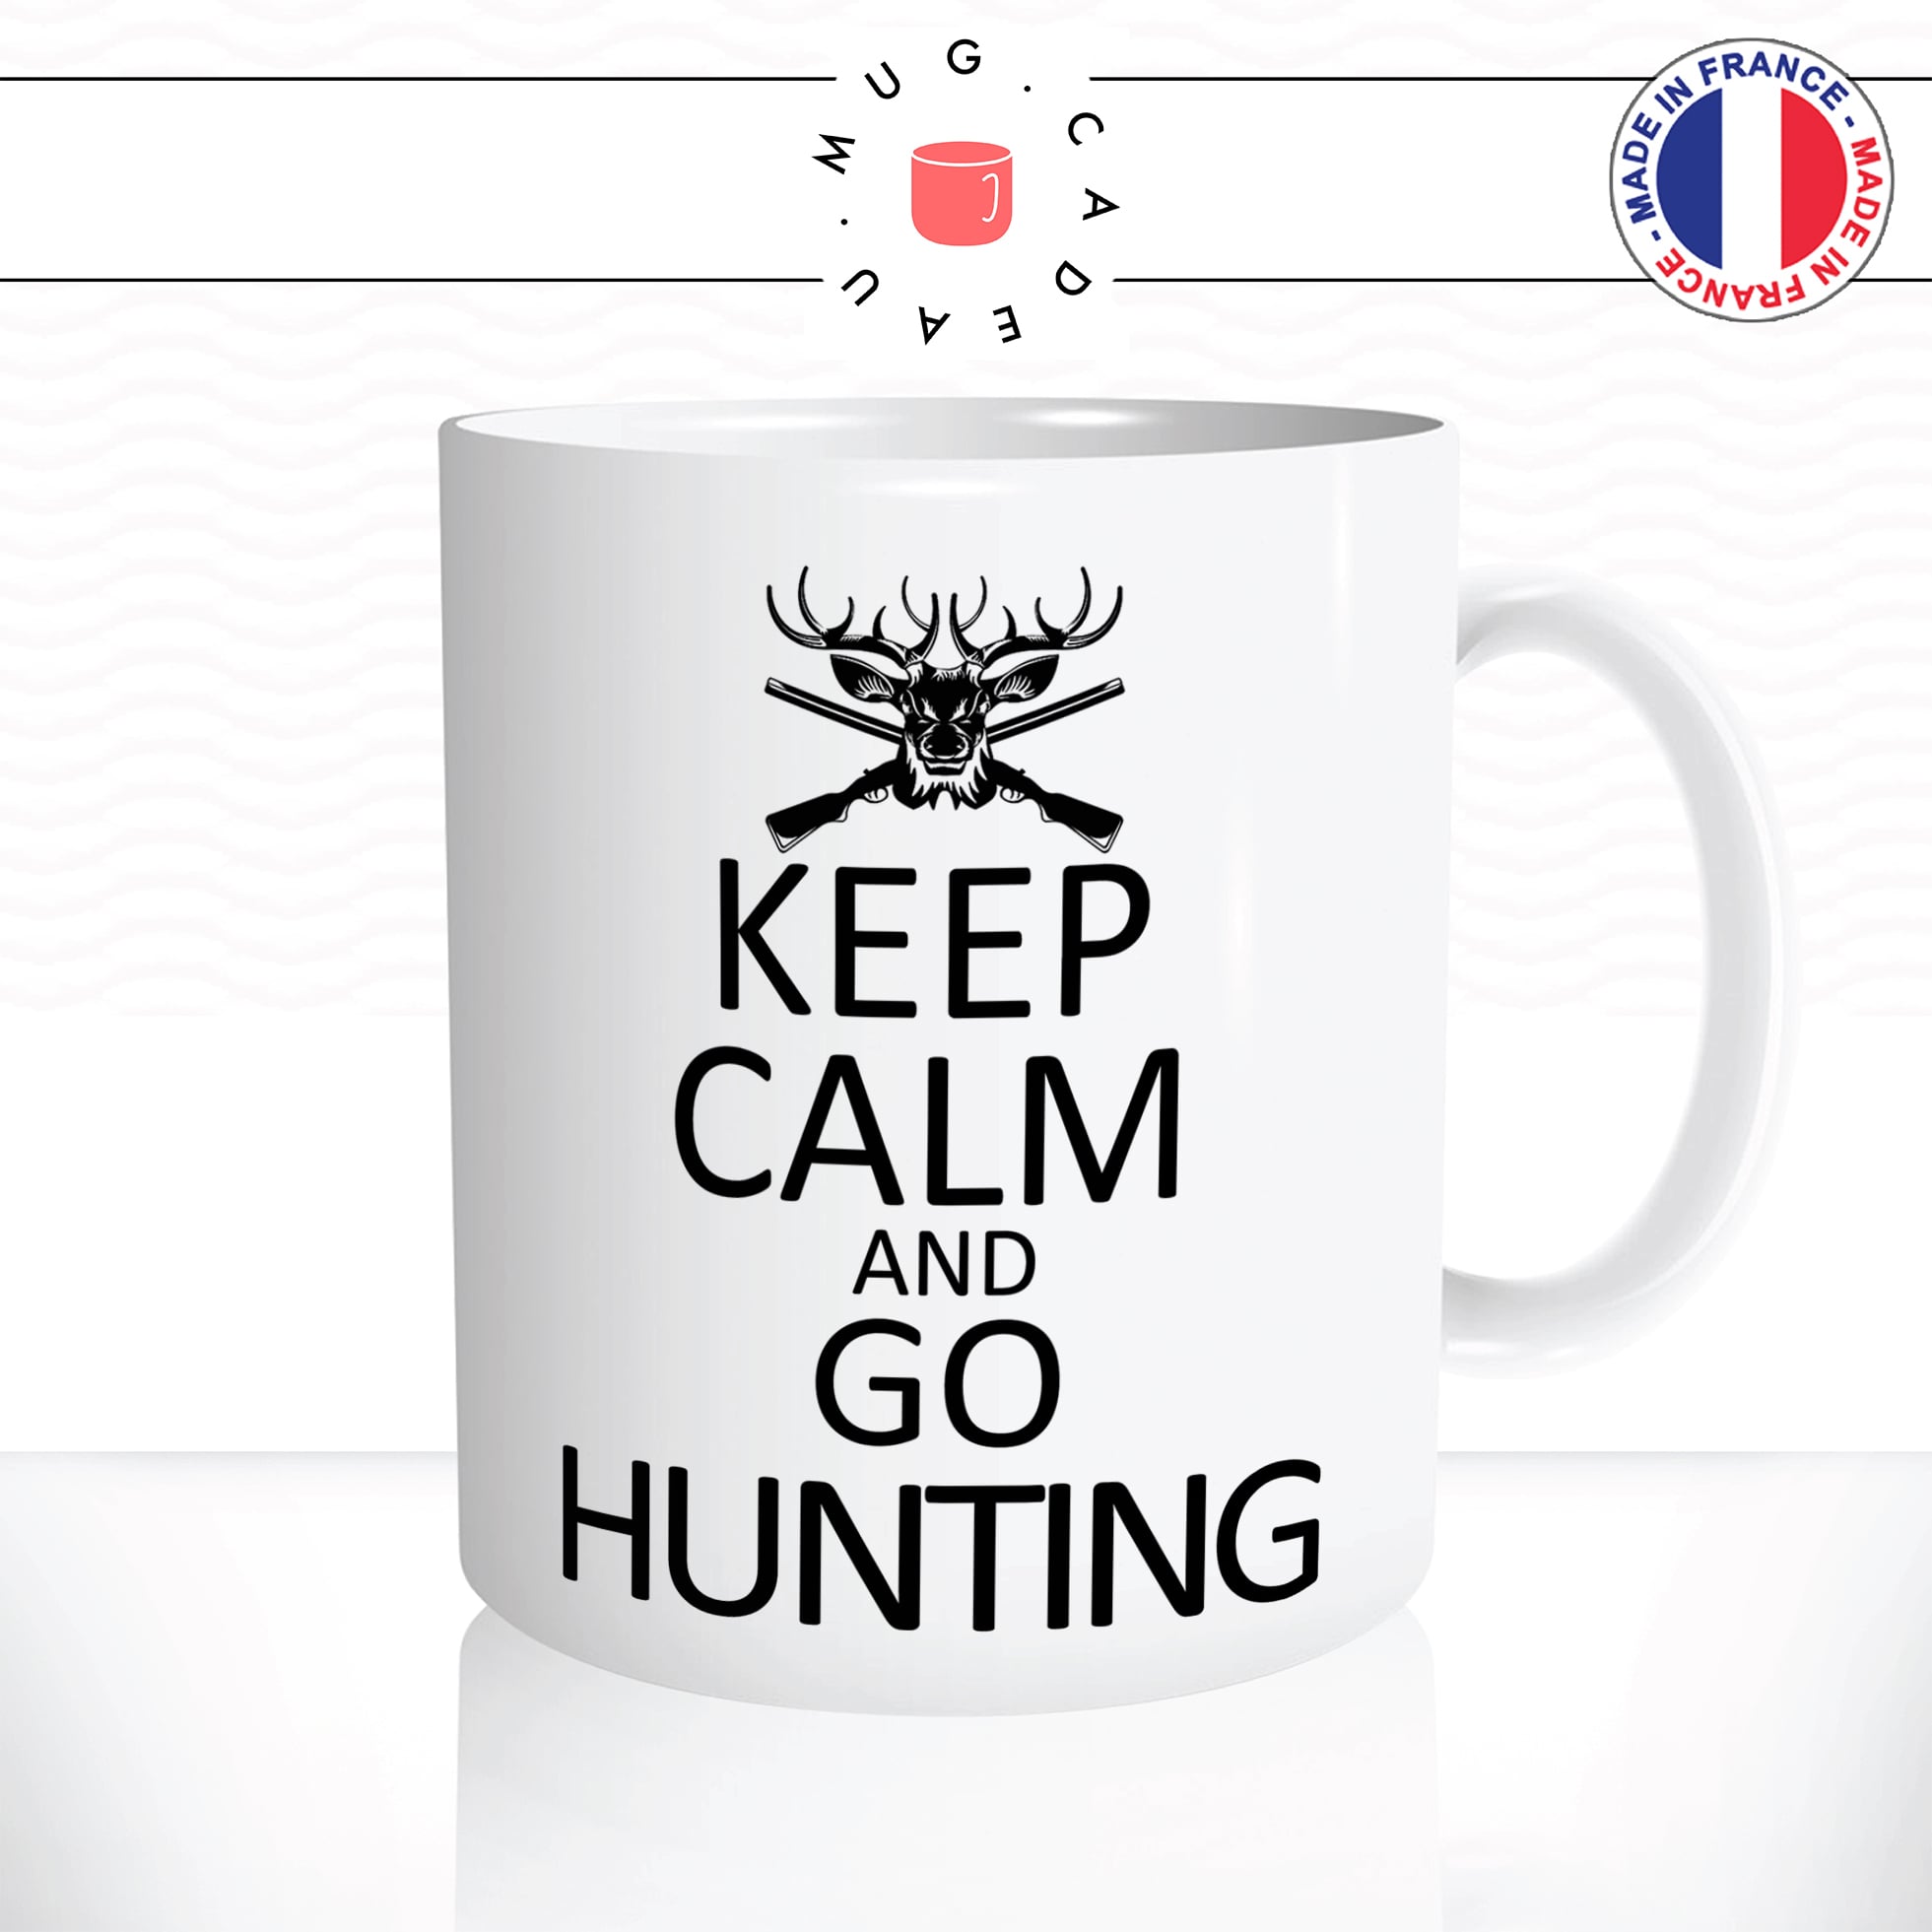 mug-tasse-keep-calm-and-go-hunting-chasse-chasser-chasseur-fusil-passion-homme-idée-cadeau-original-fun-café-thé-tasse-personnalisée2-min